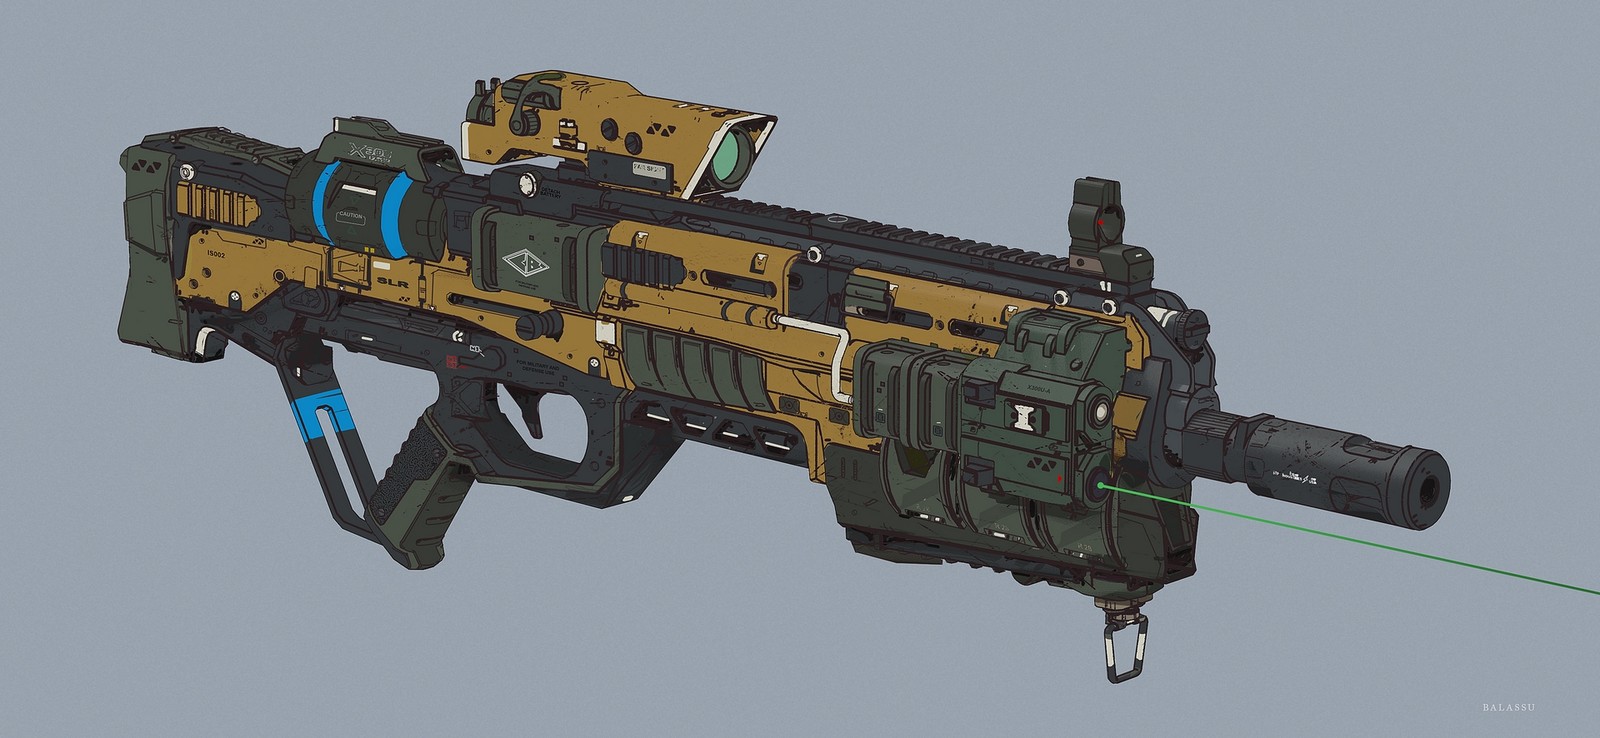 Rifle 03 Concept